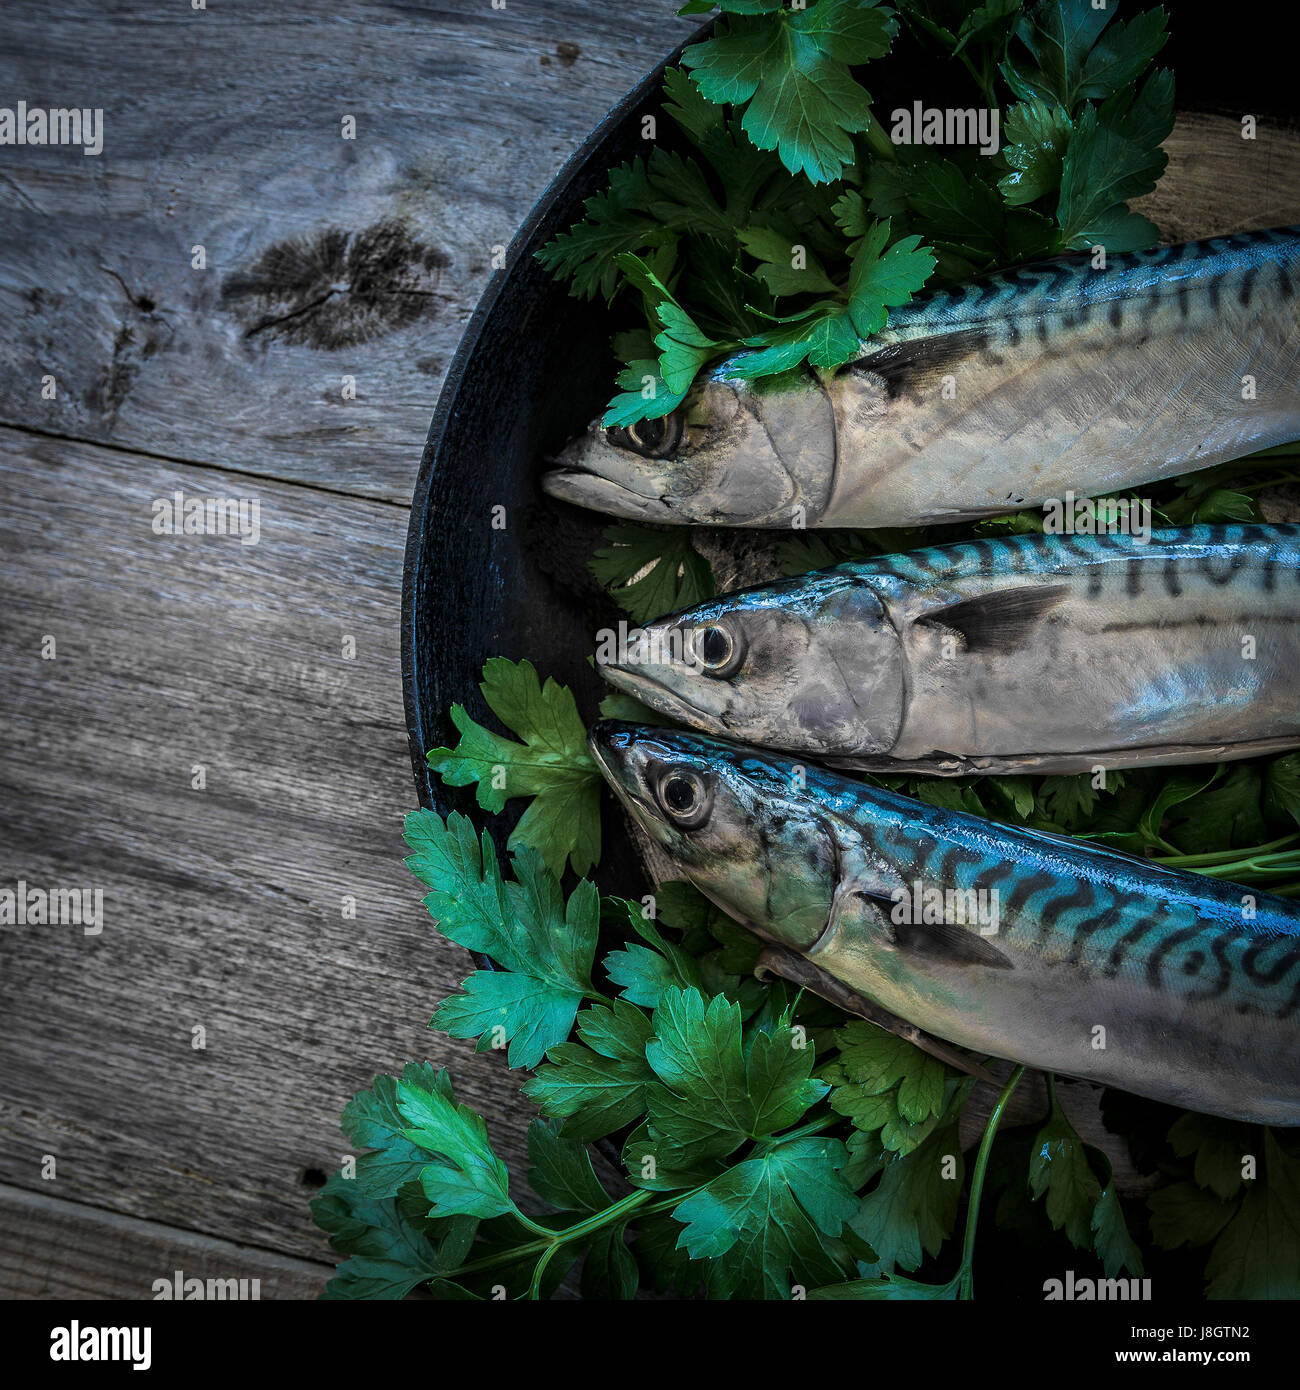 An overhead view of three mackerel in a skillet; Herbs; Flat leaved parsley; Frying pan; Skillet pan; Food; Fish; Seafood; Pelagic fish; Stock Photo